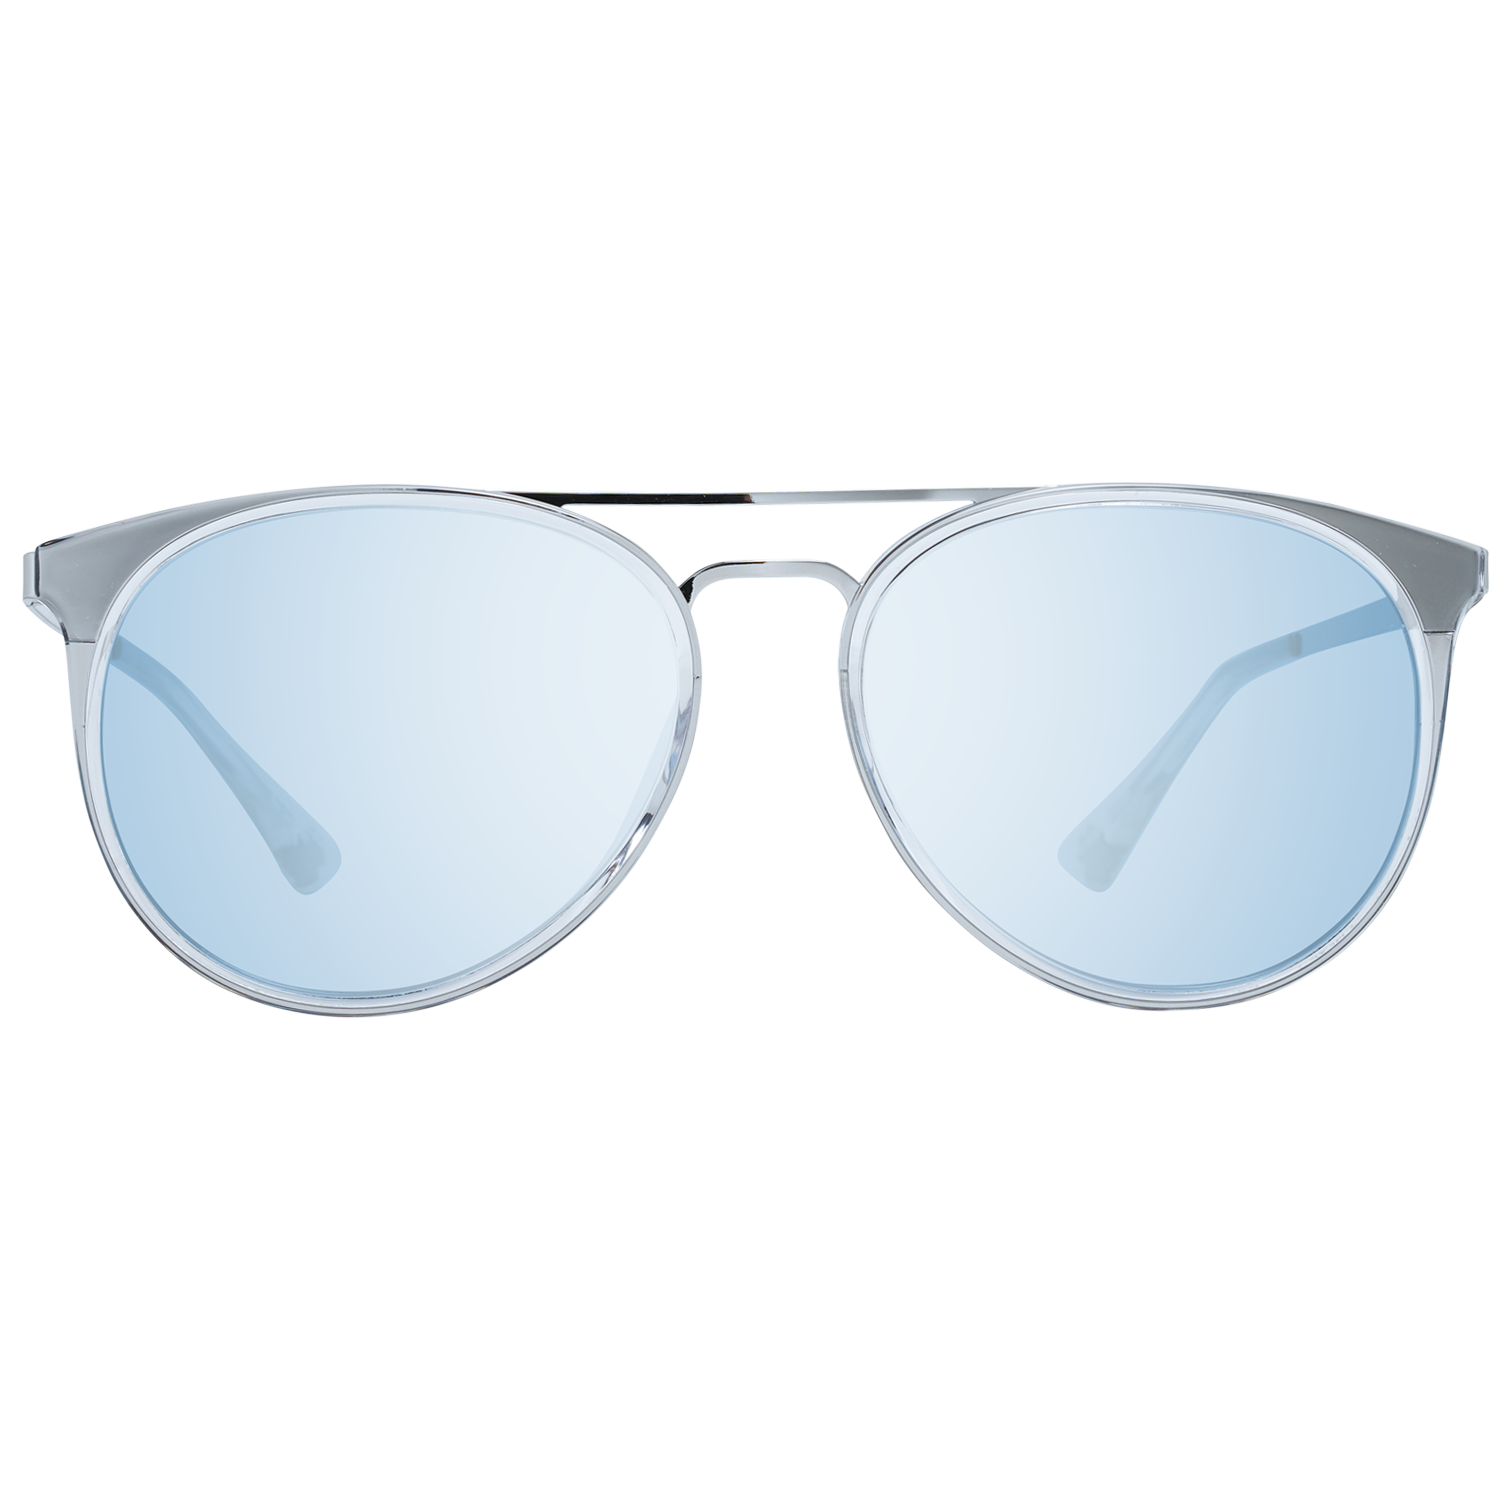 Spy Sunglasses Spy Sunglasses 6700000000056 Toddy 56 Eyeglasses Eyewear UK USA Australia 